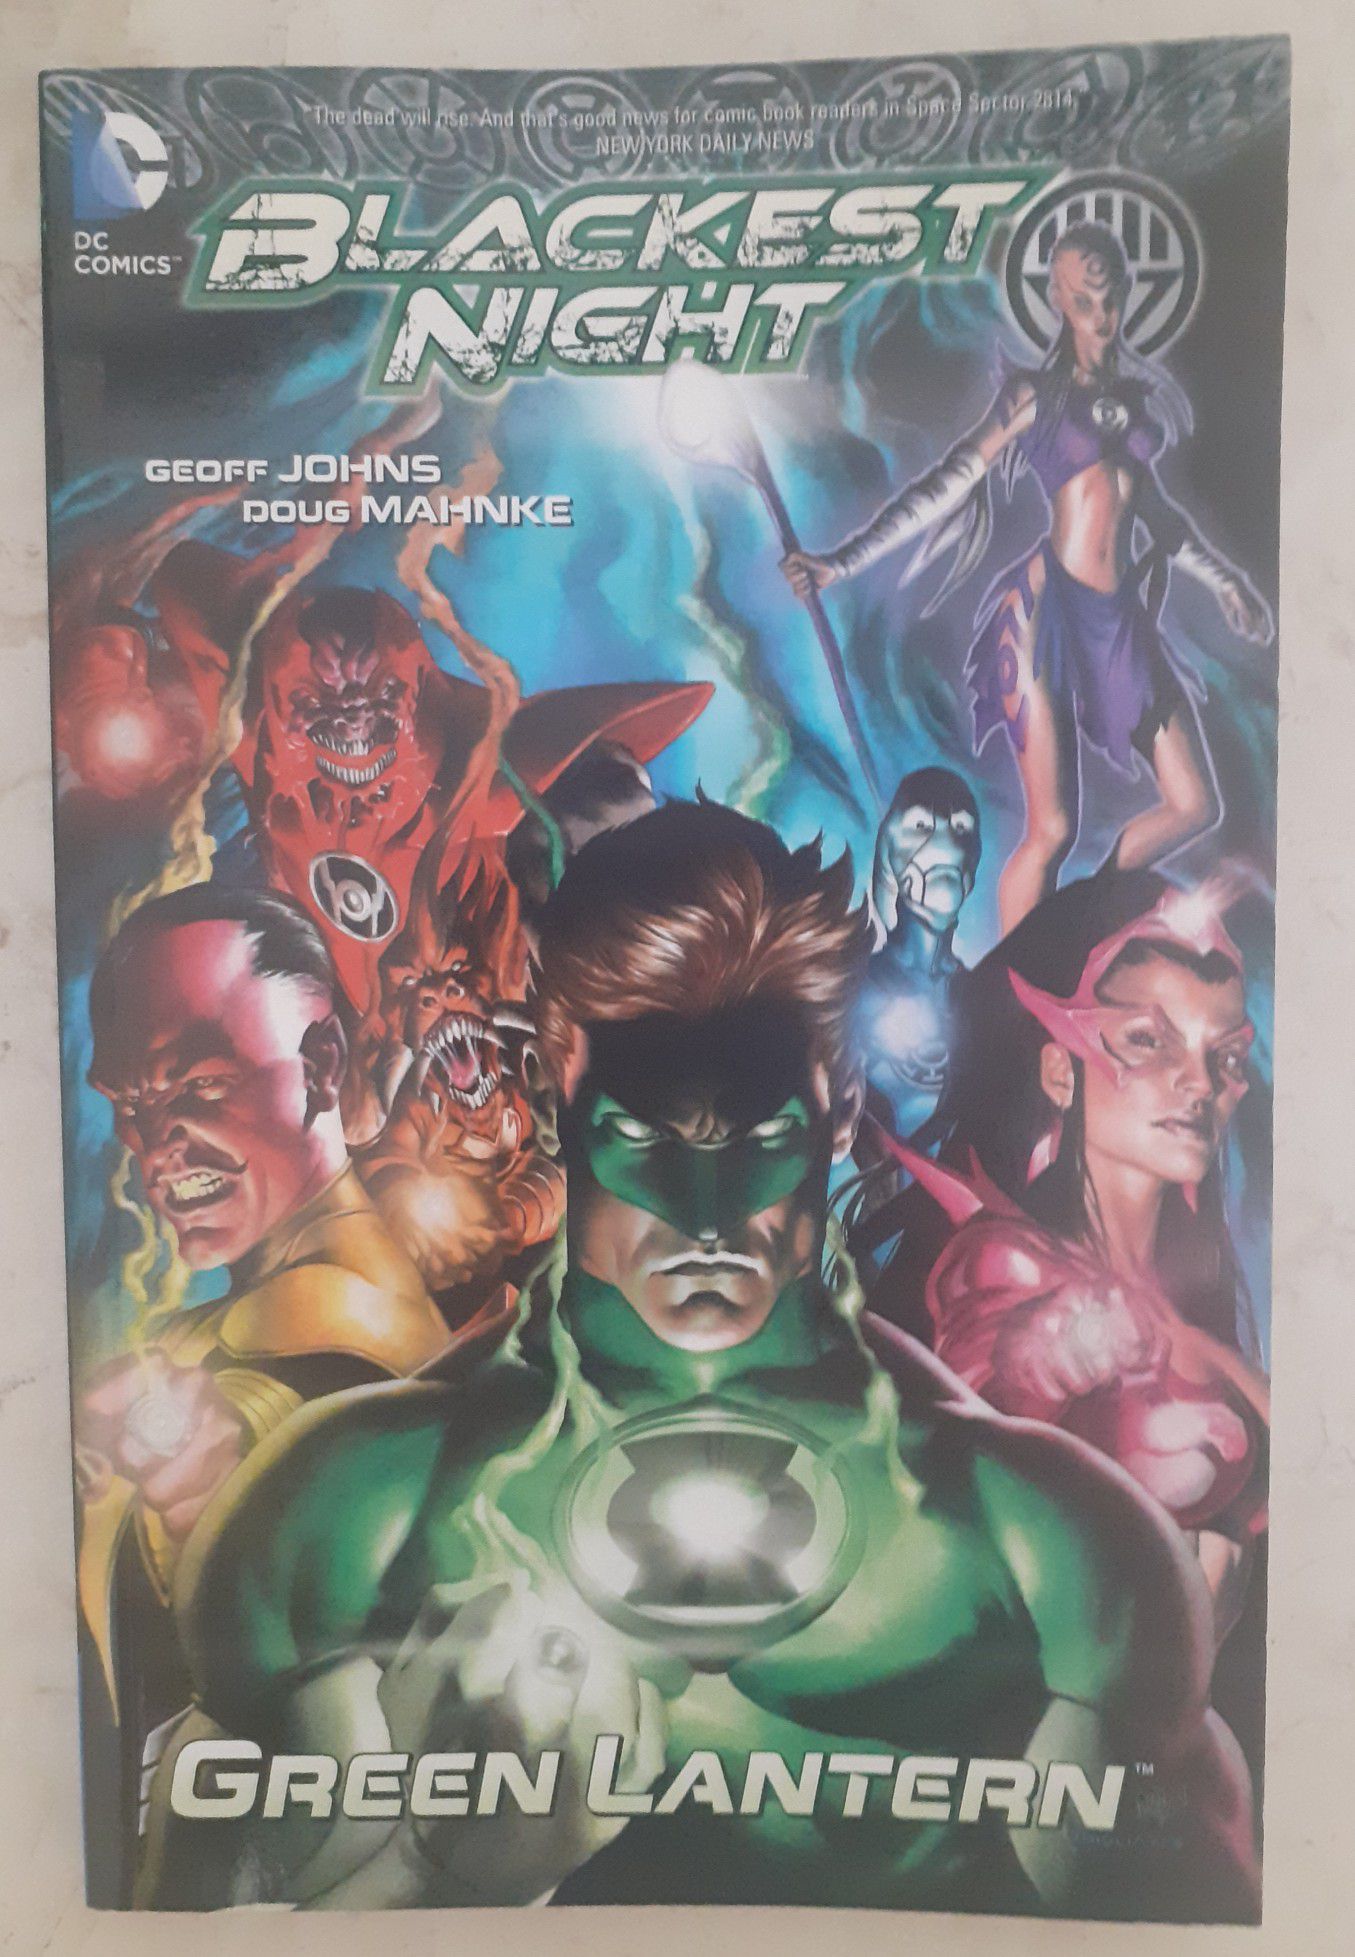 Blackest Night: Green Lantern 2010 Hardcover Book DC Comics. Condition is Like New.